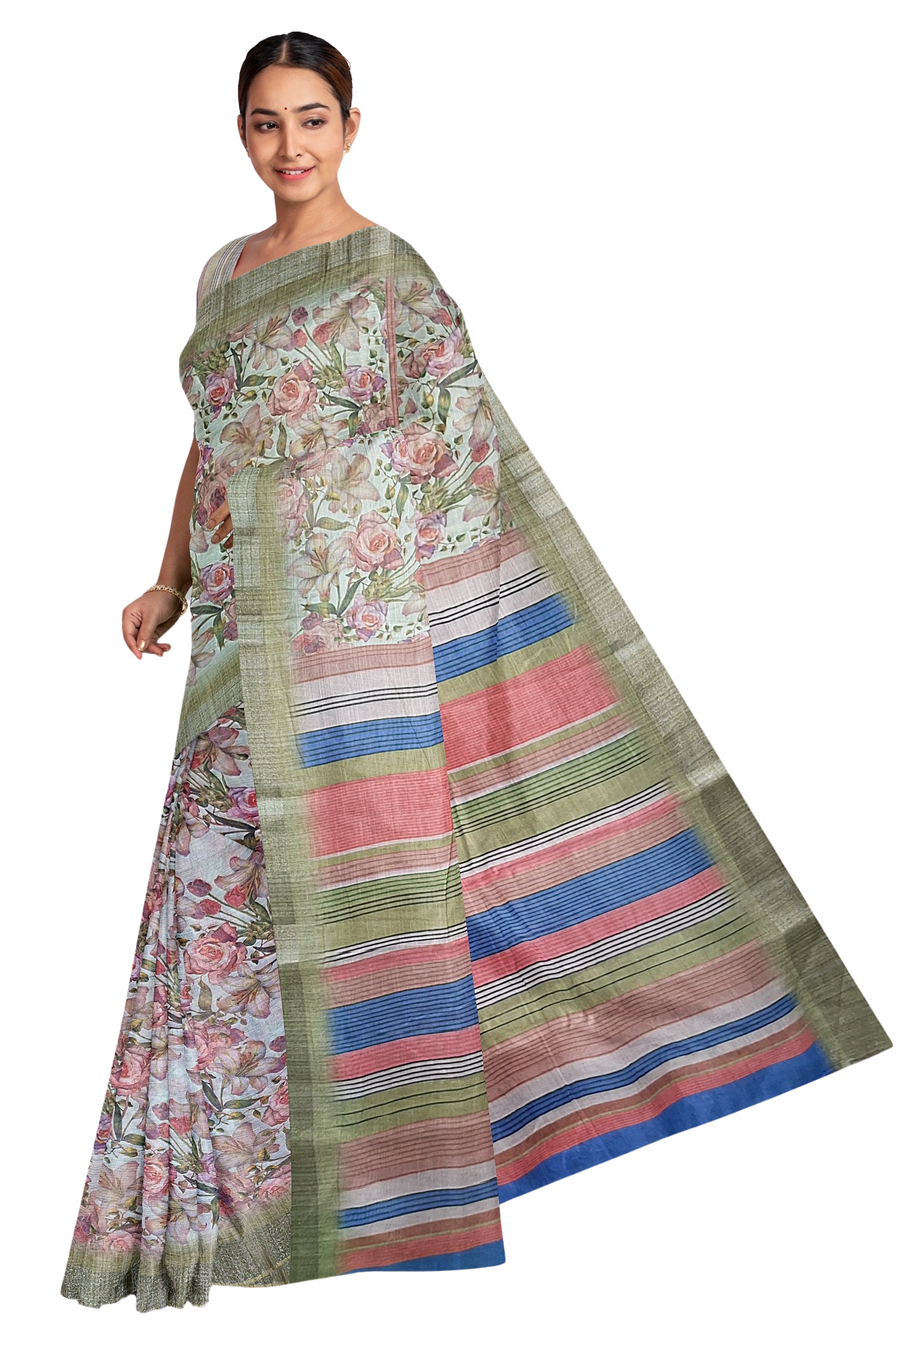 Pure Linen Digital Print Saree by Sarandhri Sanyogita Roses in Full Bloom x One Blouse